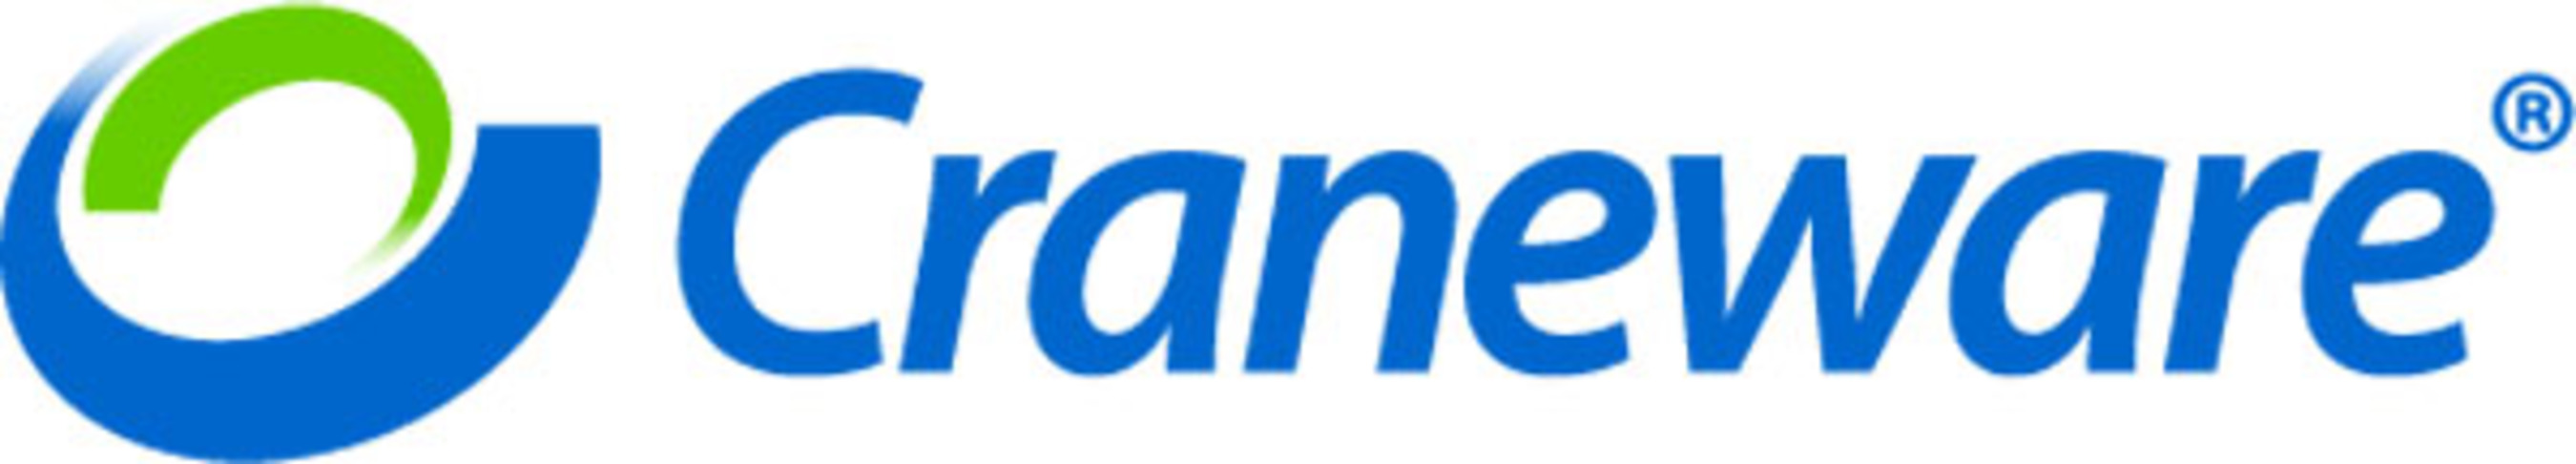 Craneware, Inc. logo